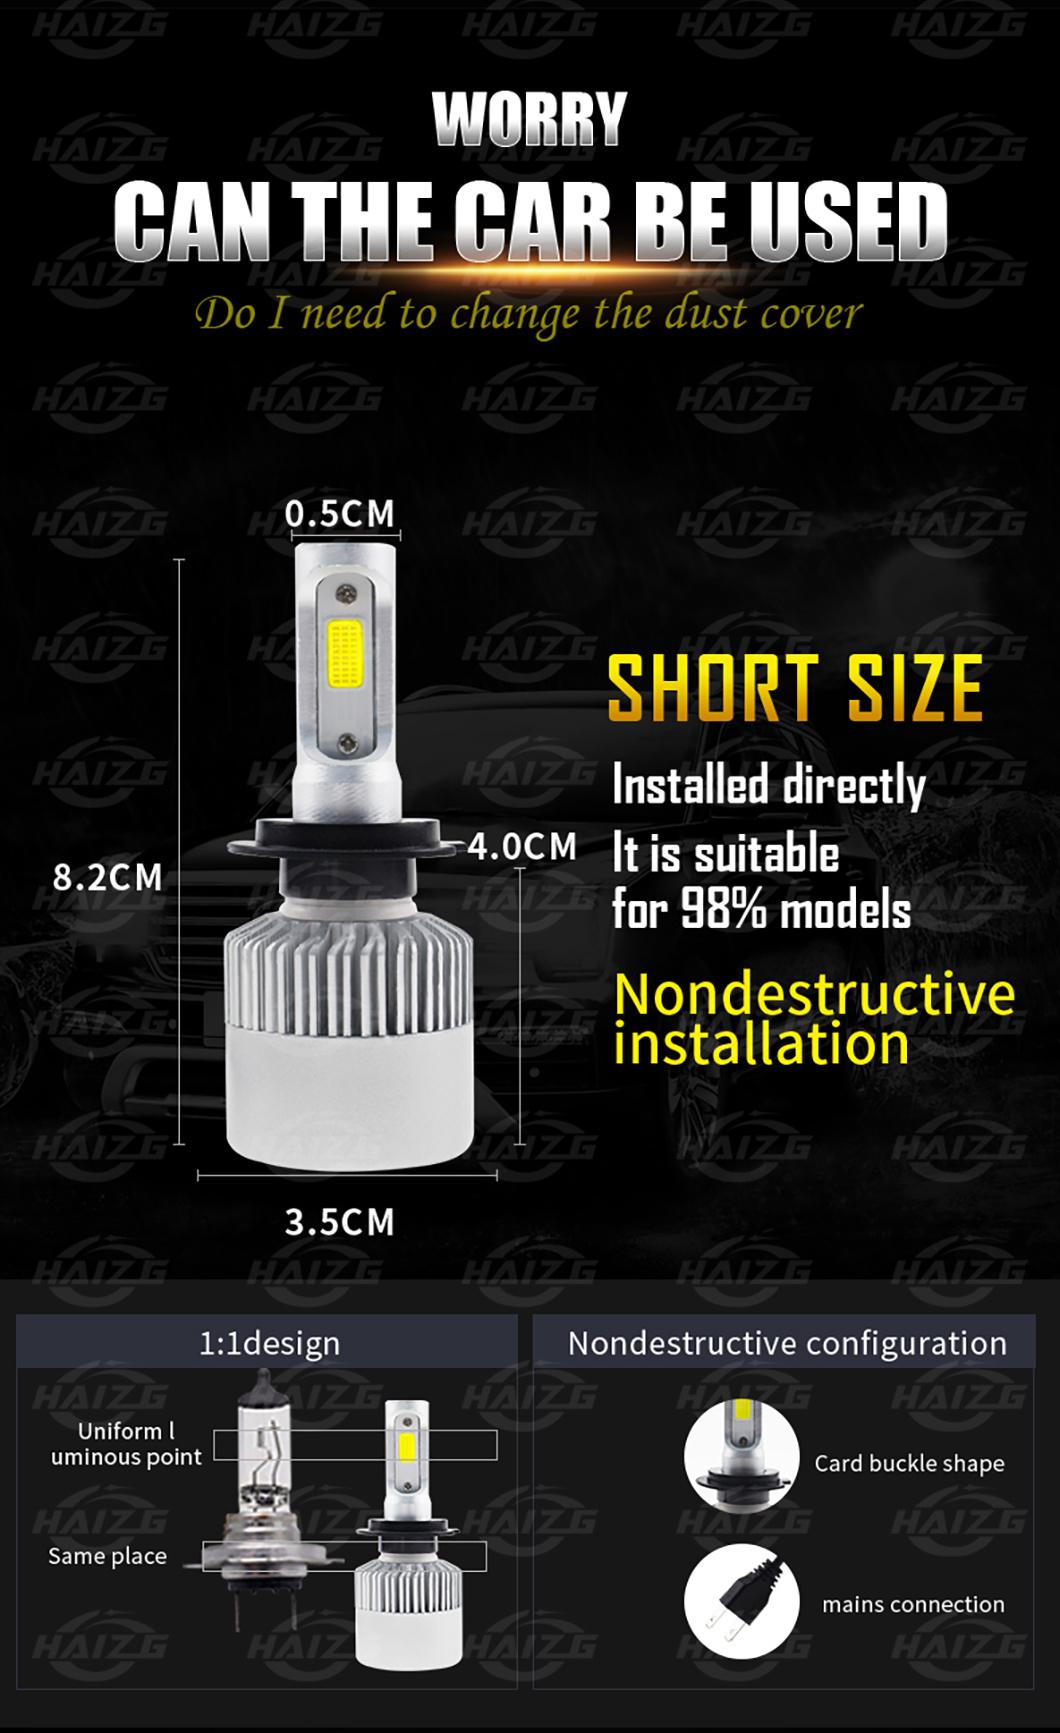 Haizg 9012/9005 Super Auto LED Light with Wholesale Price Light